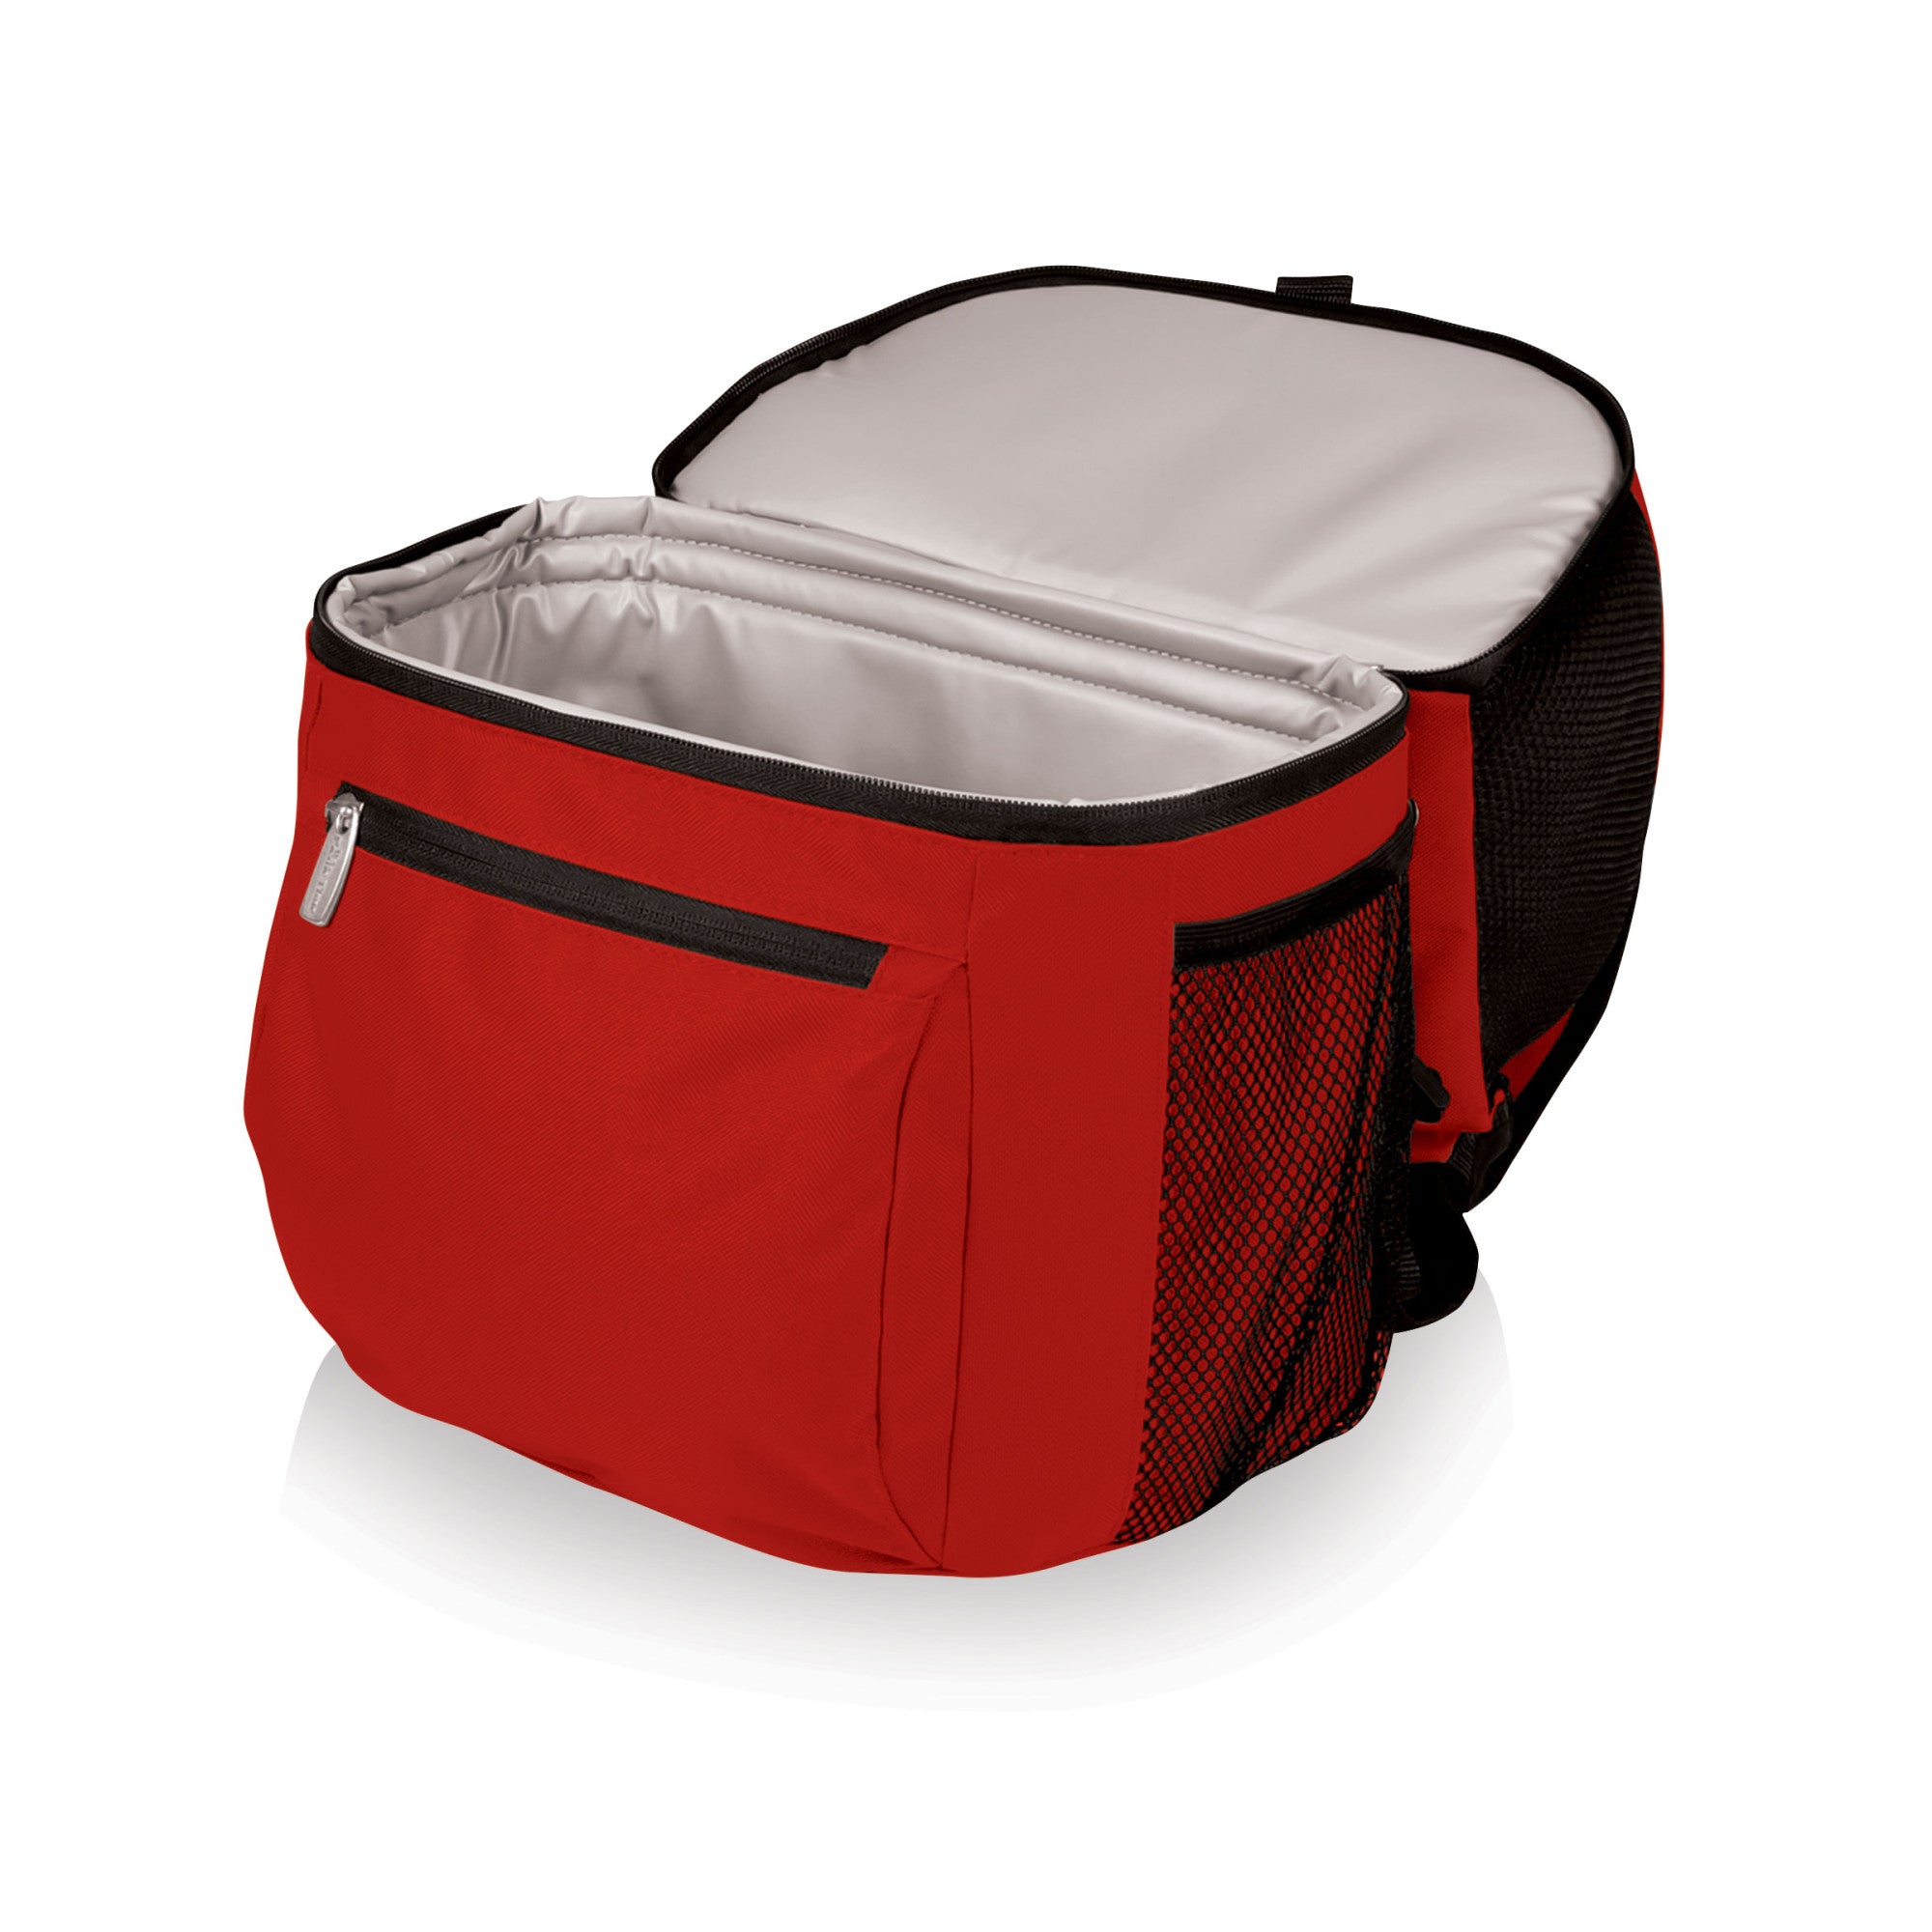 Washington Nationals - Zuma Backpack Cooler